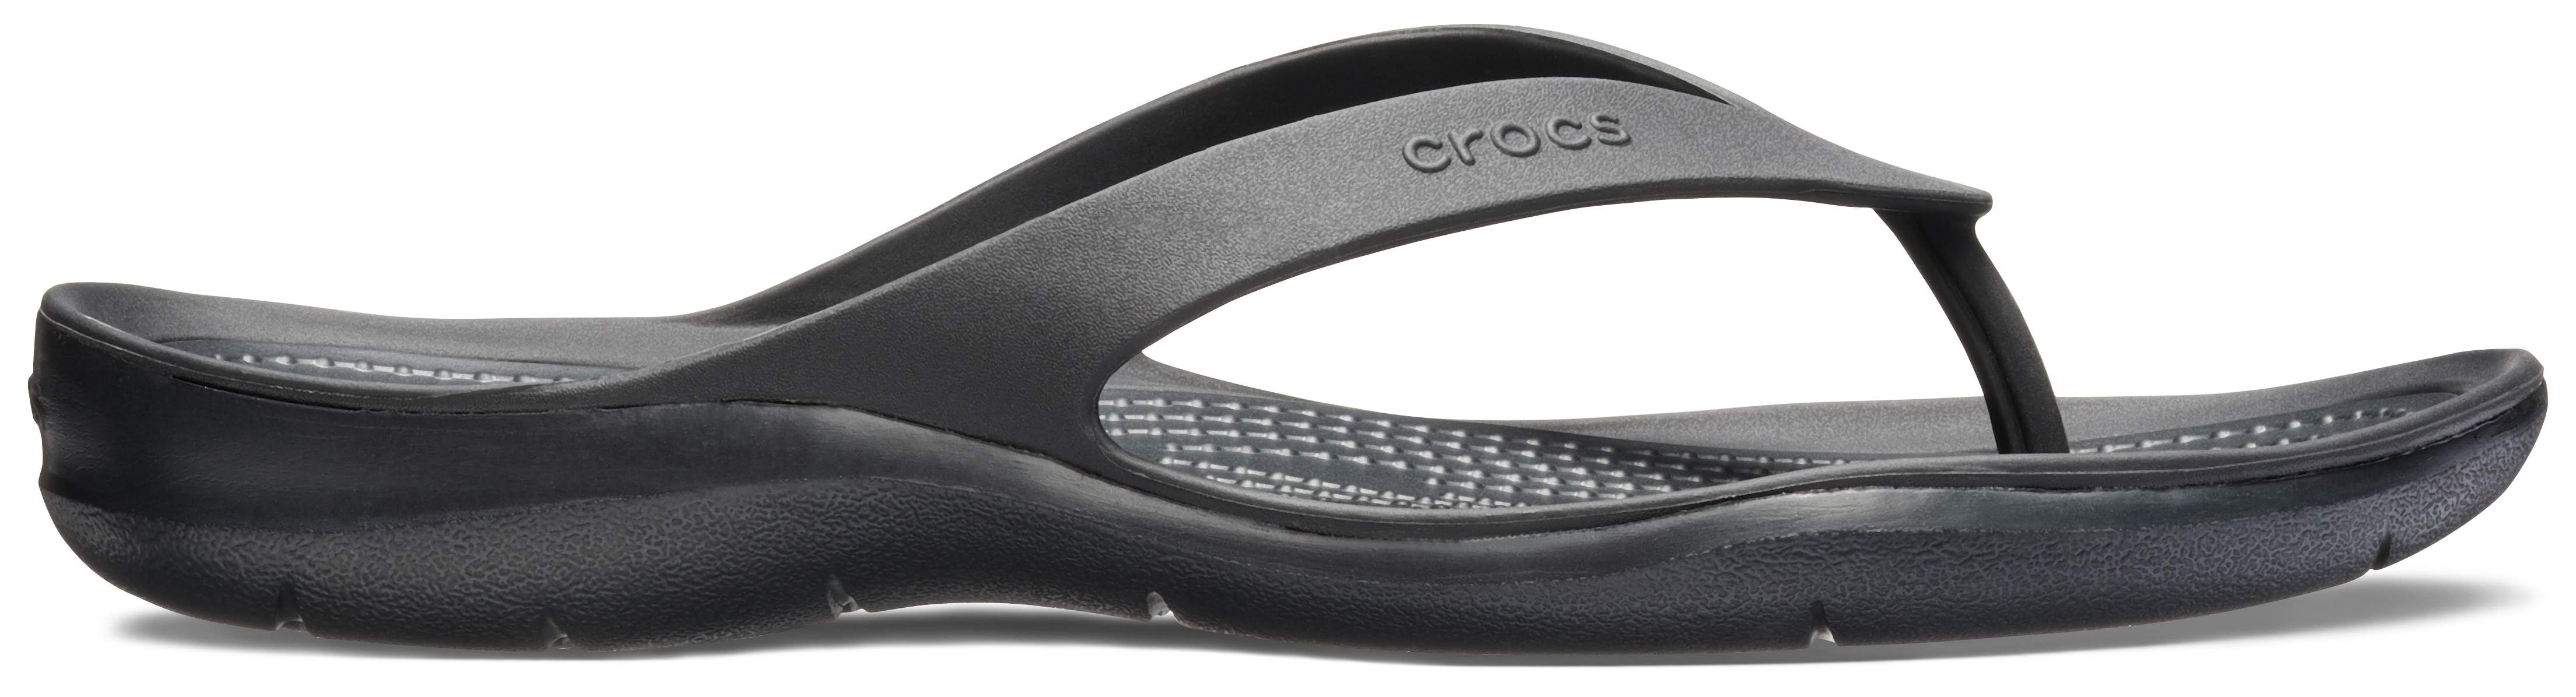 crocs 204974